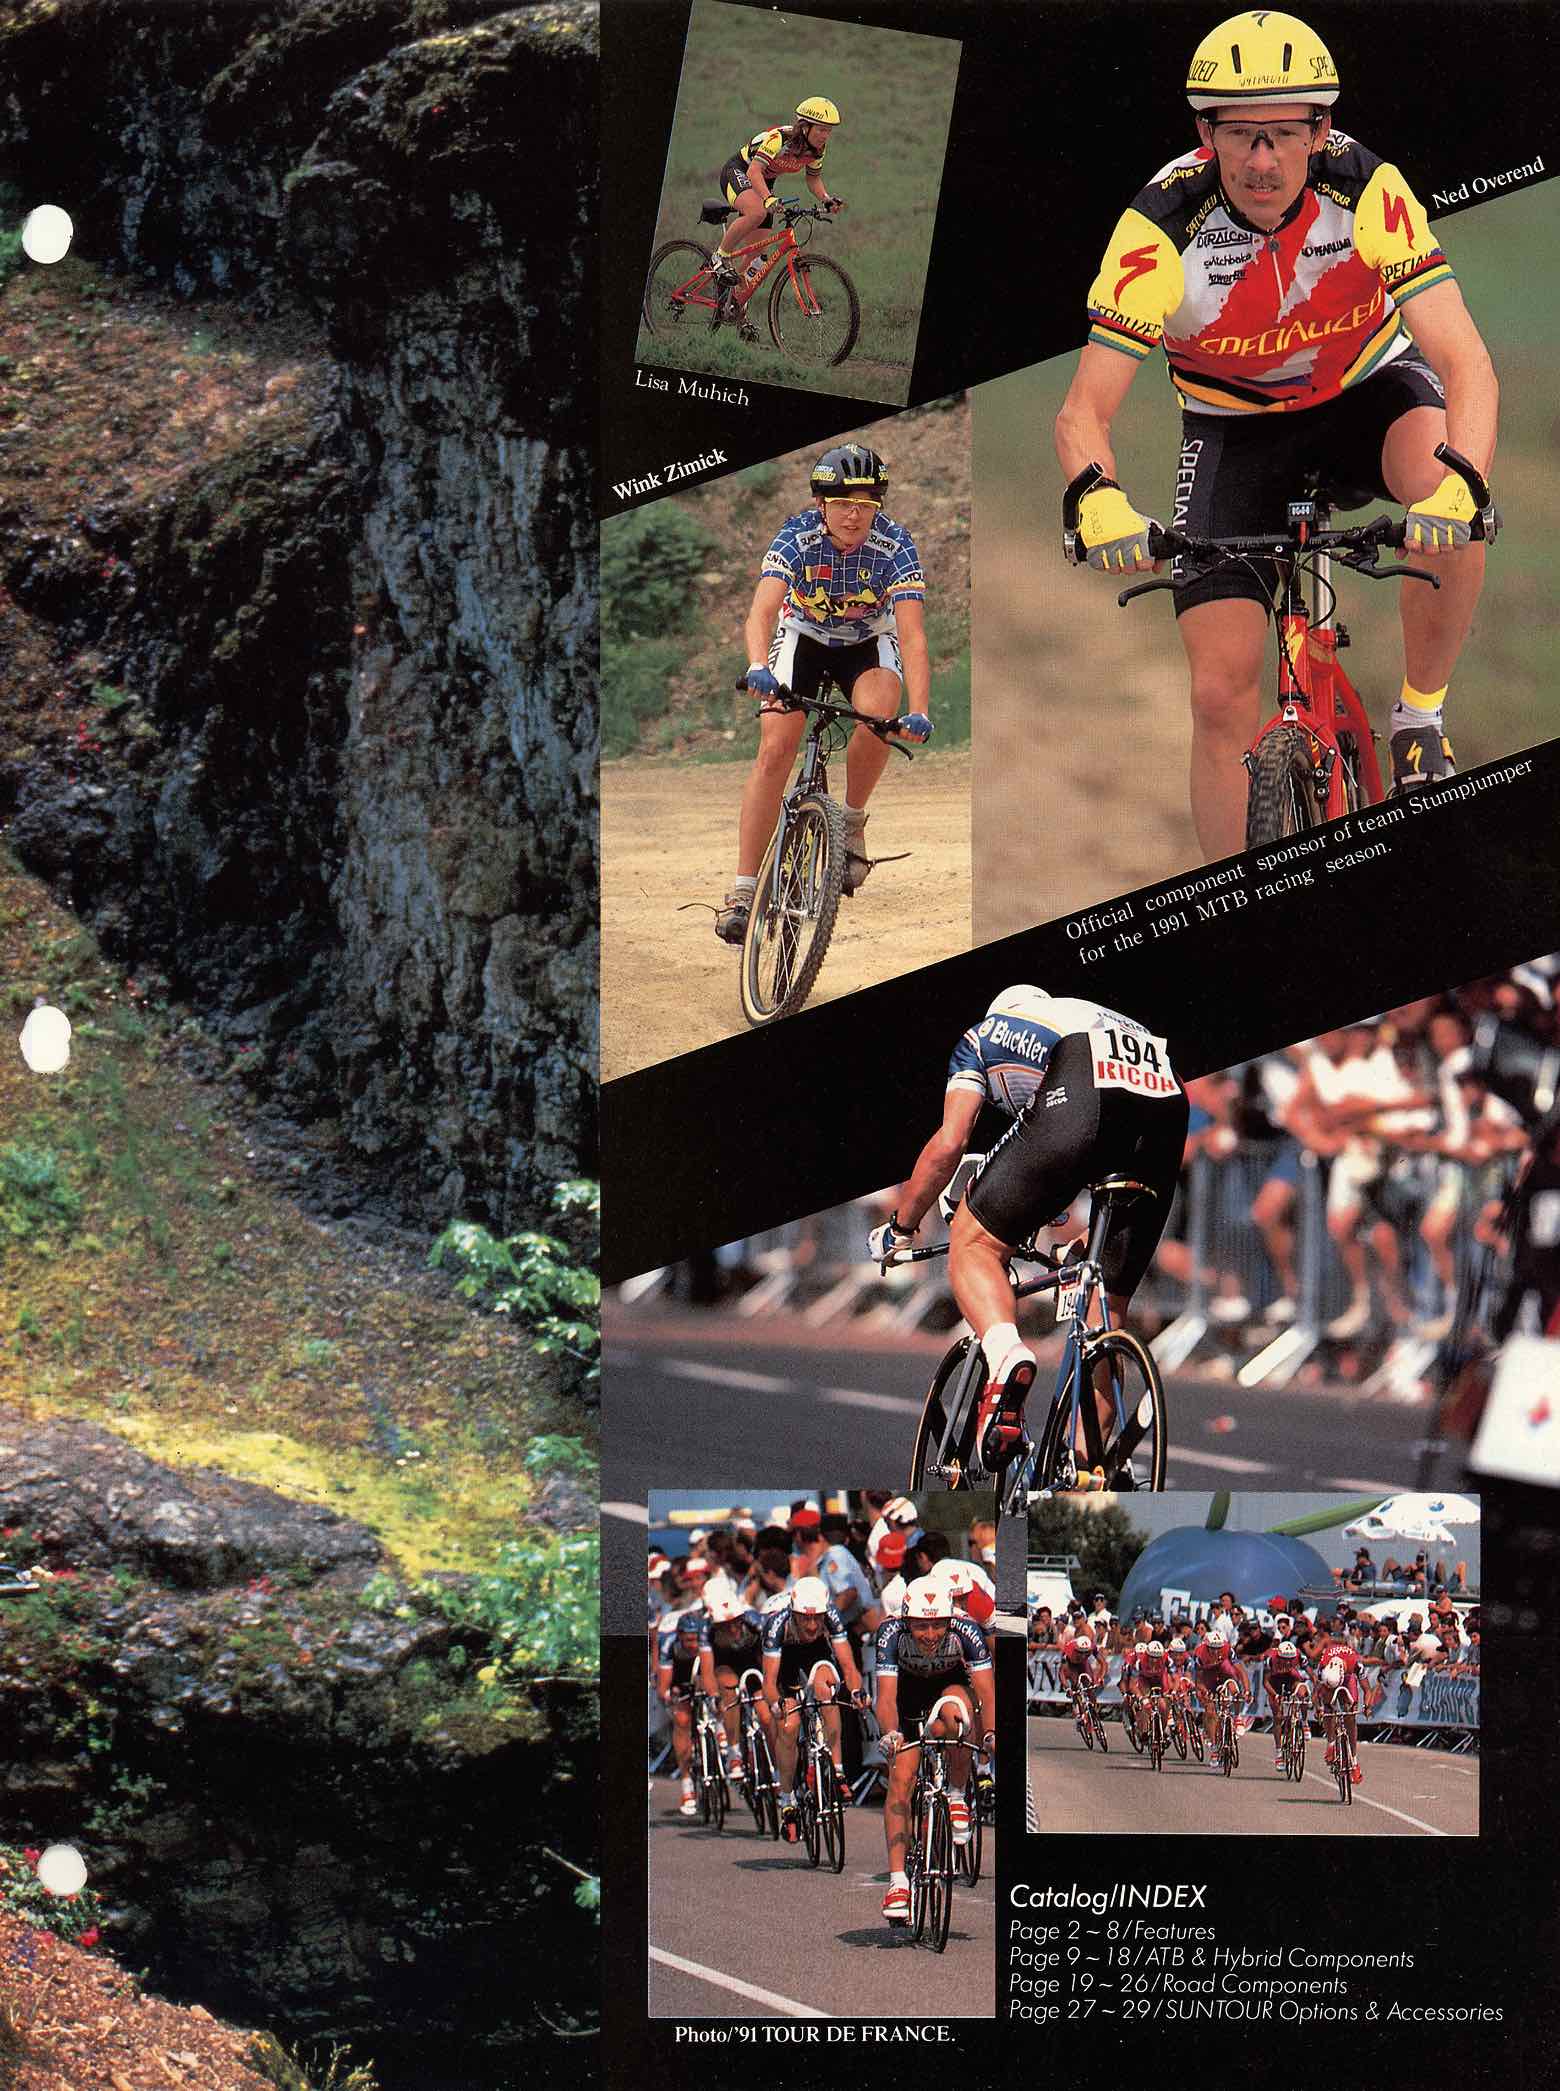 SunTour Bicycle Equipment Catalog 1992 - Page 1 main image